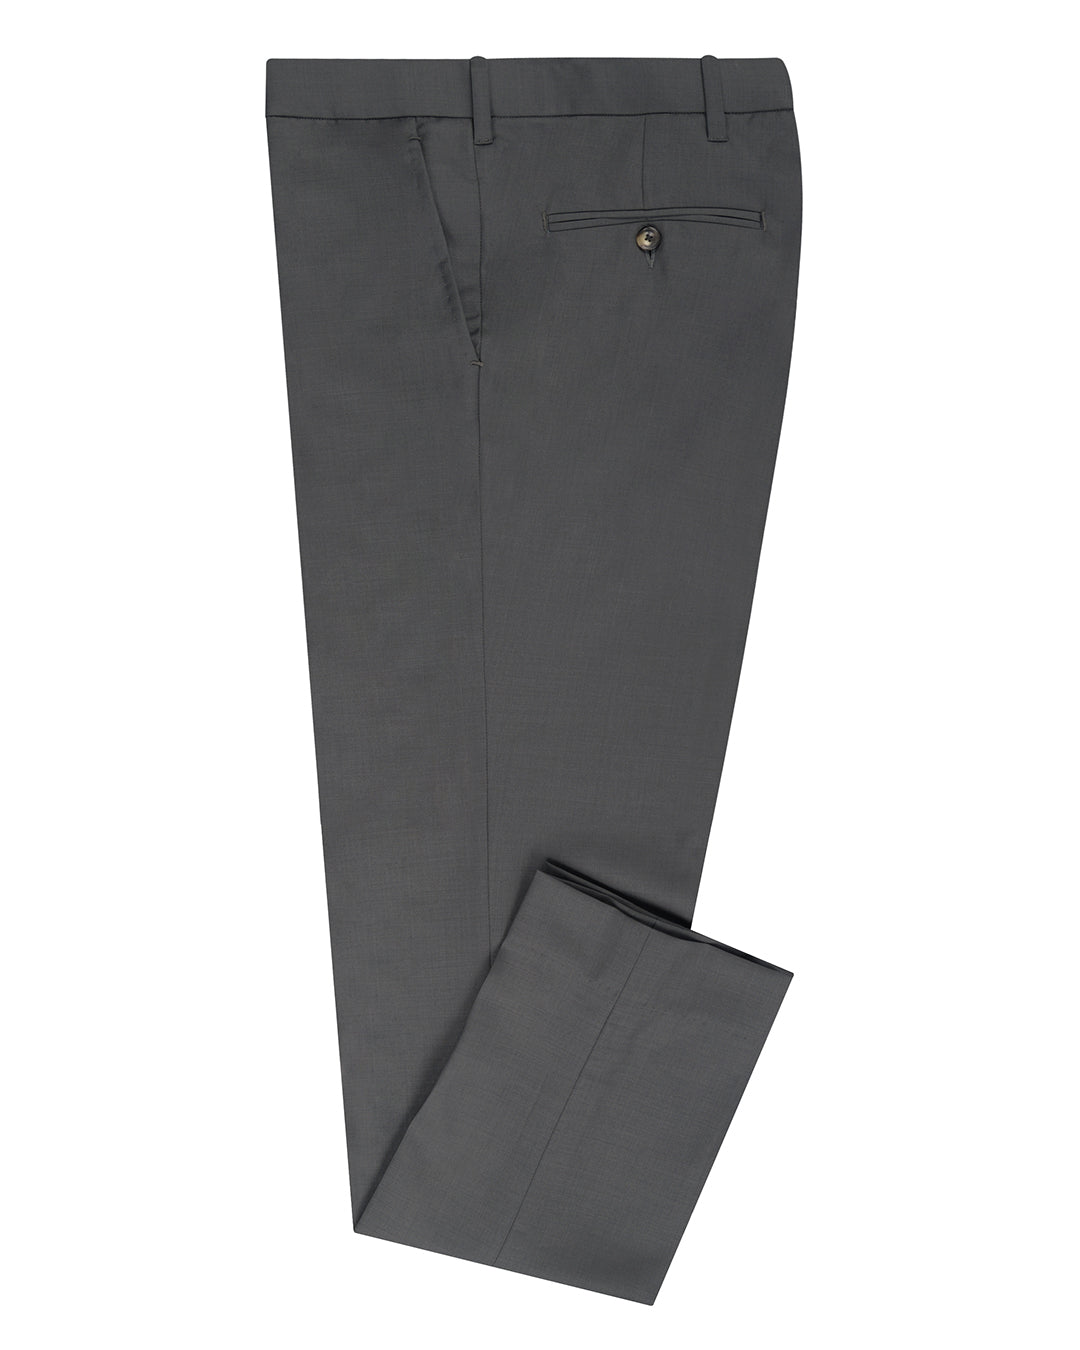 Washable Wool Pants: Plain Grey